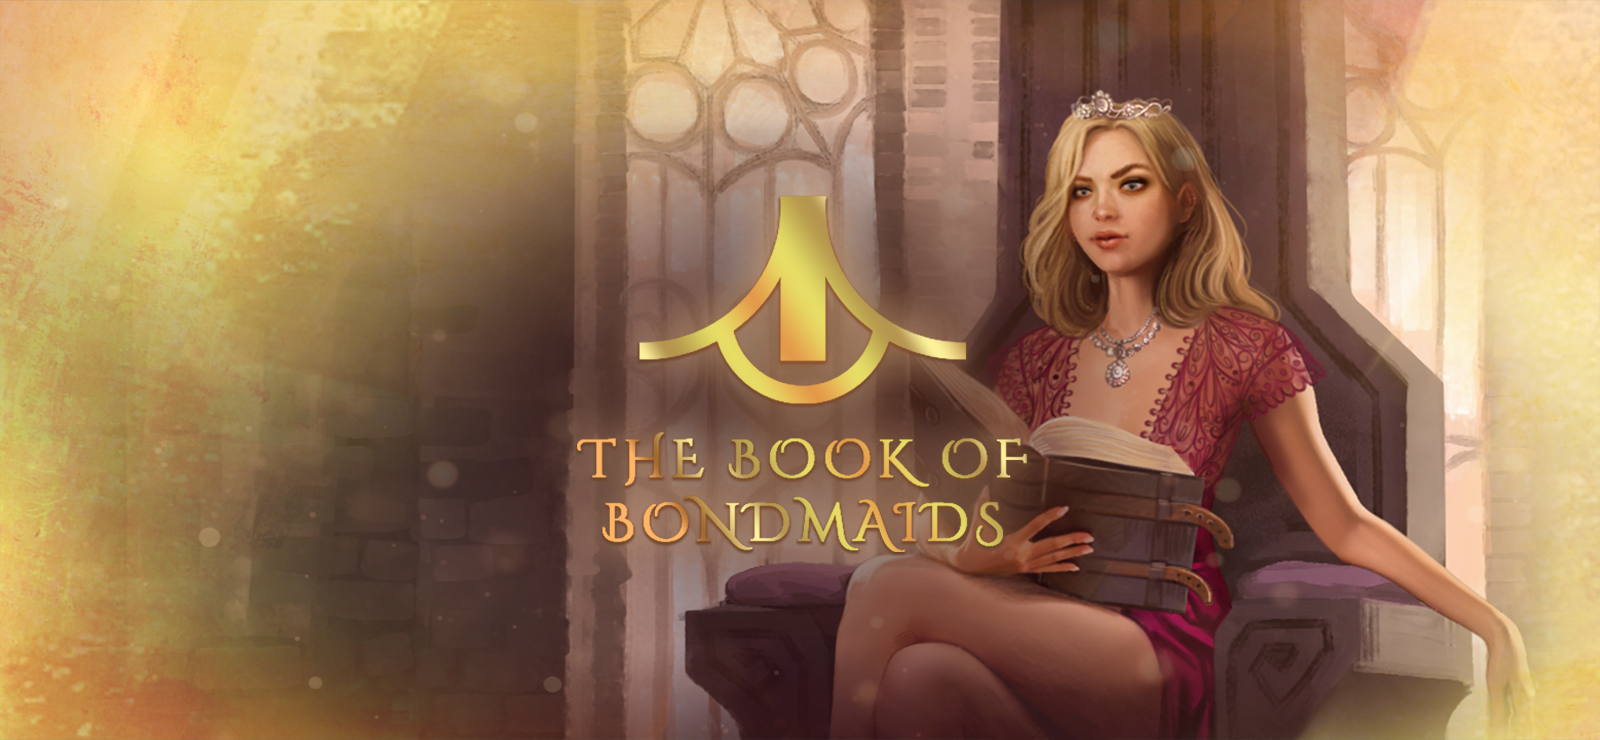 The Book Of Bondmaids